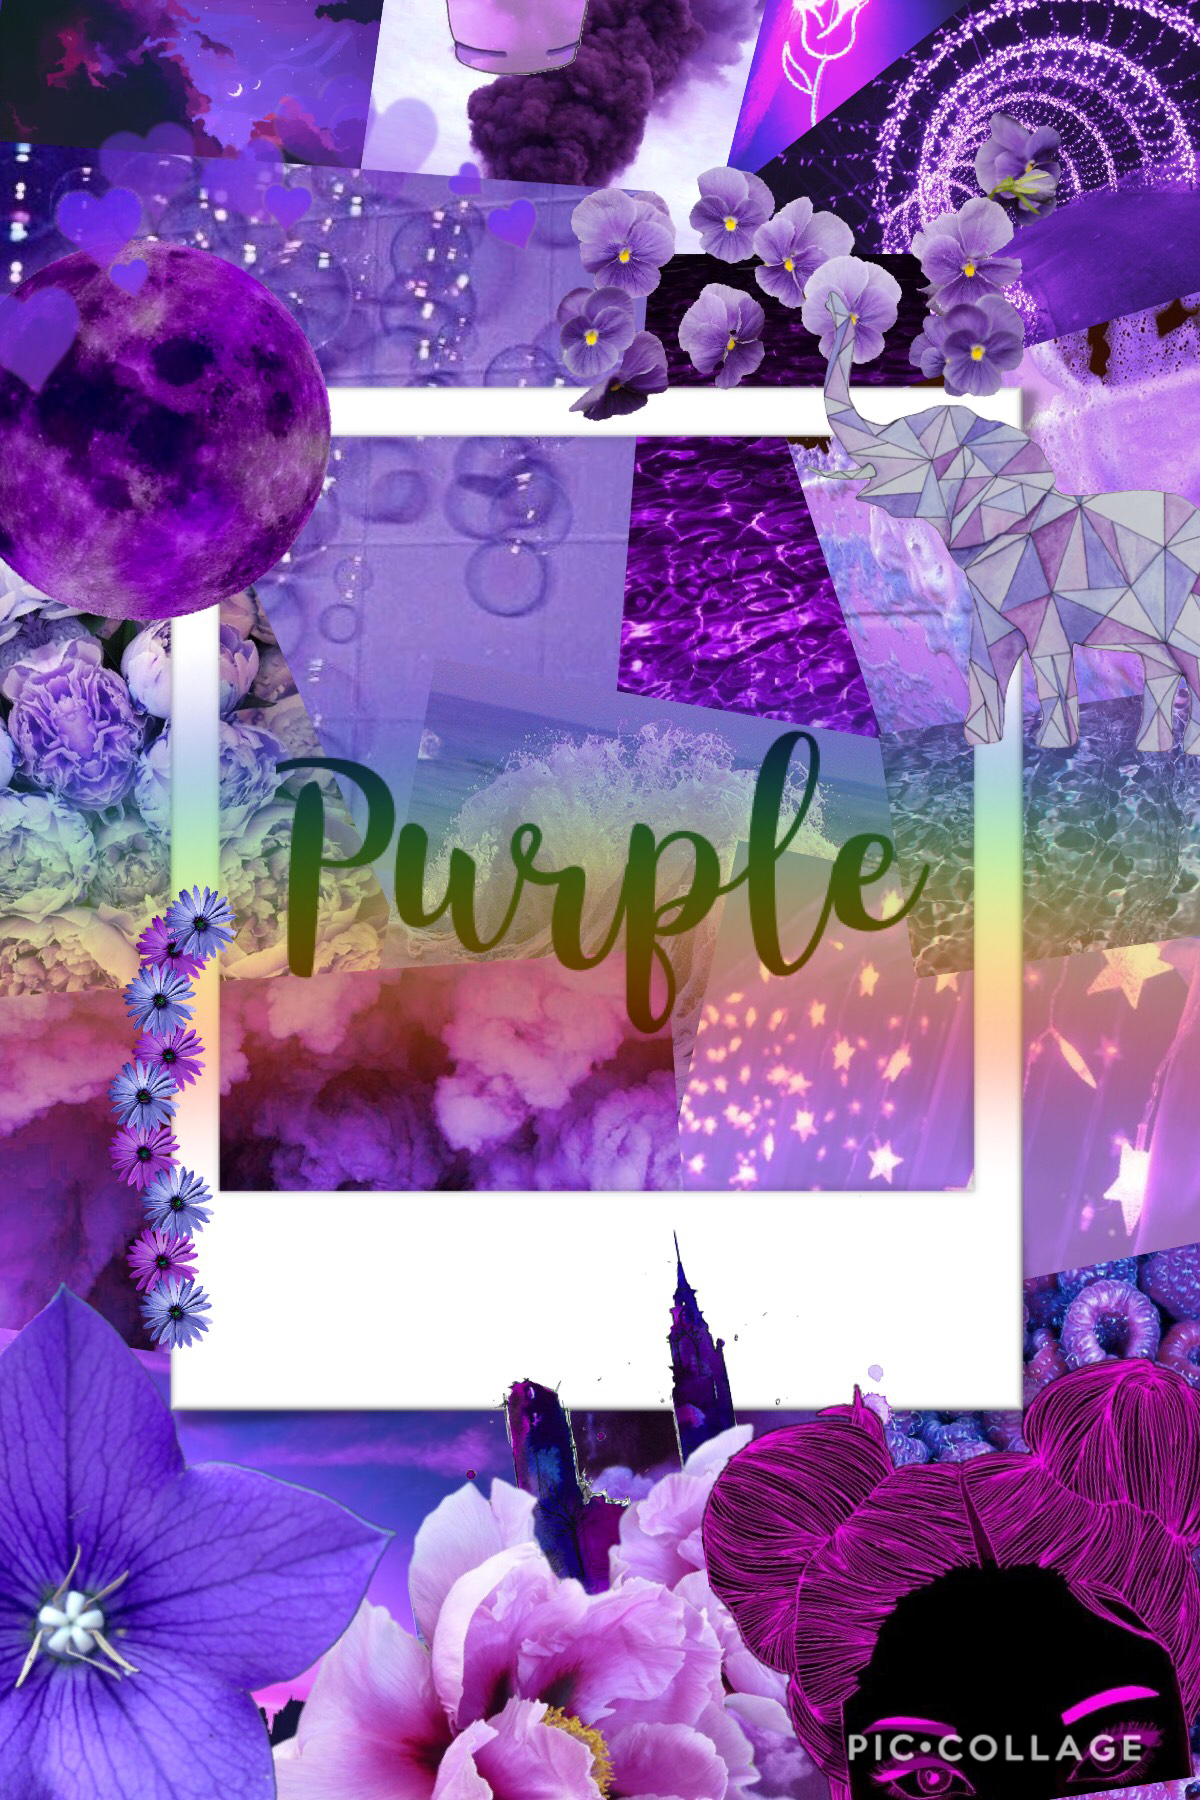 Purple 
11.4.18